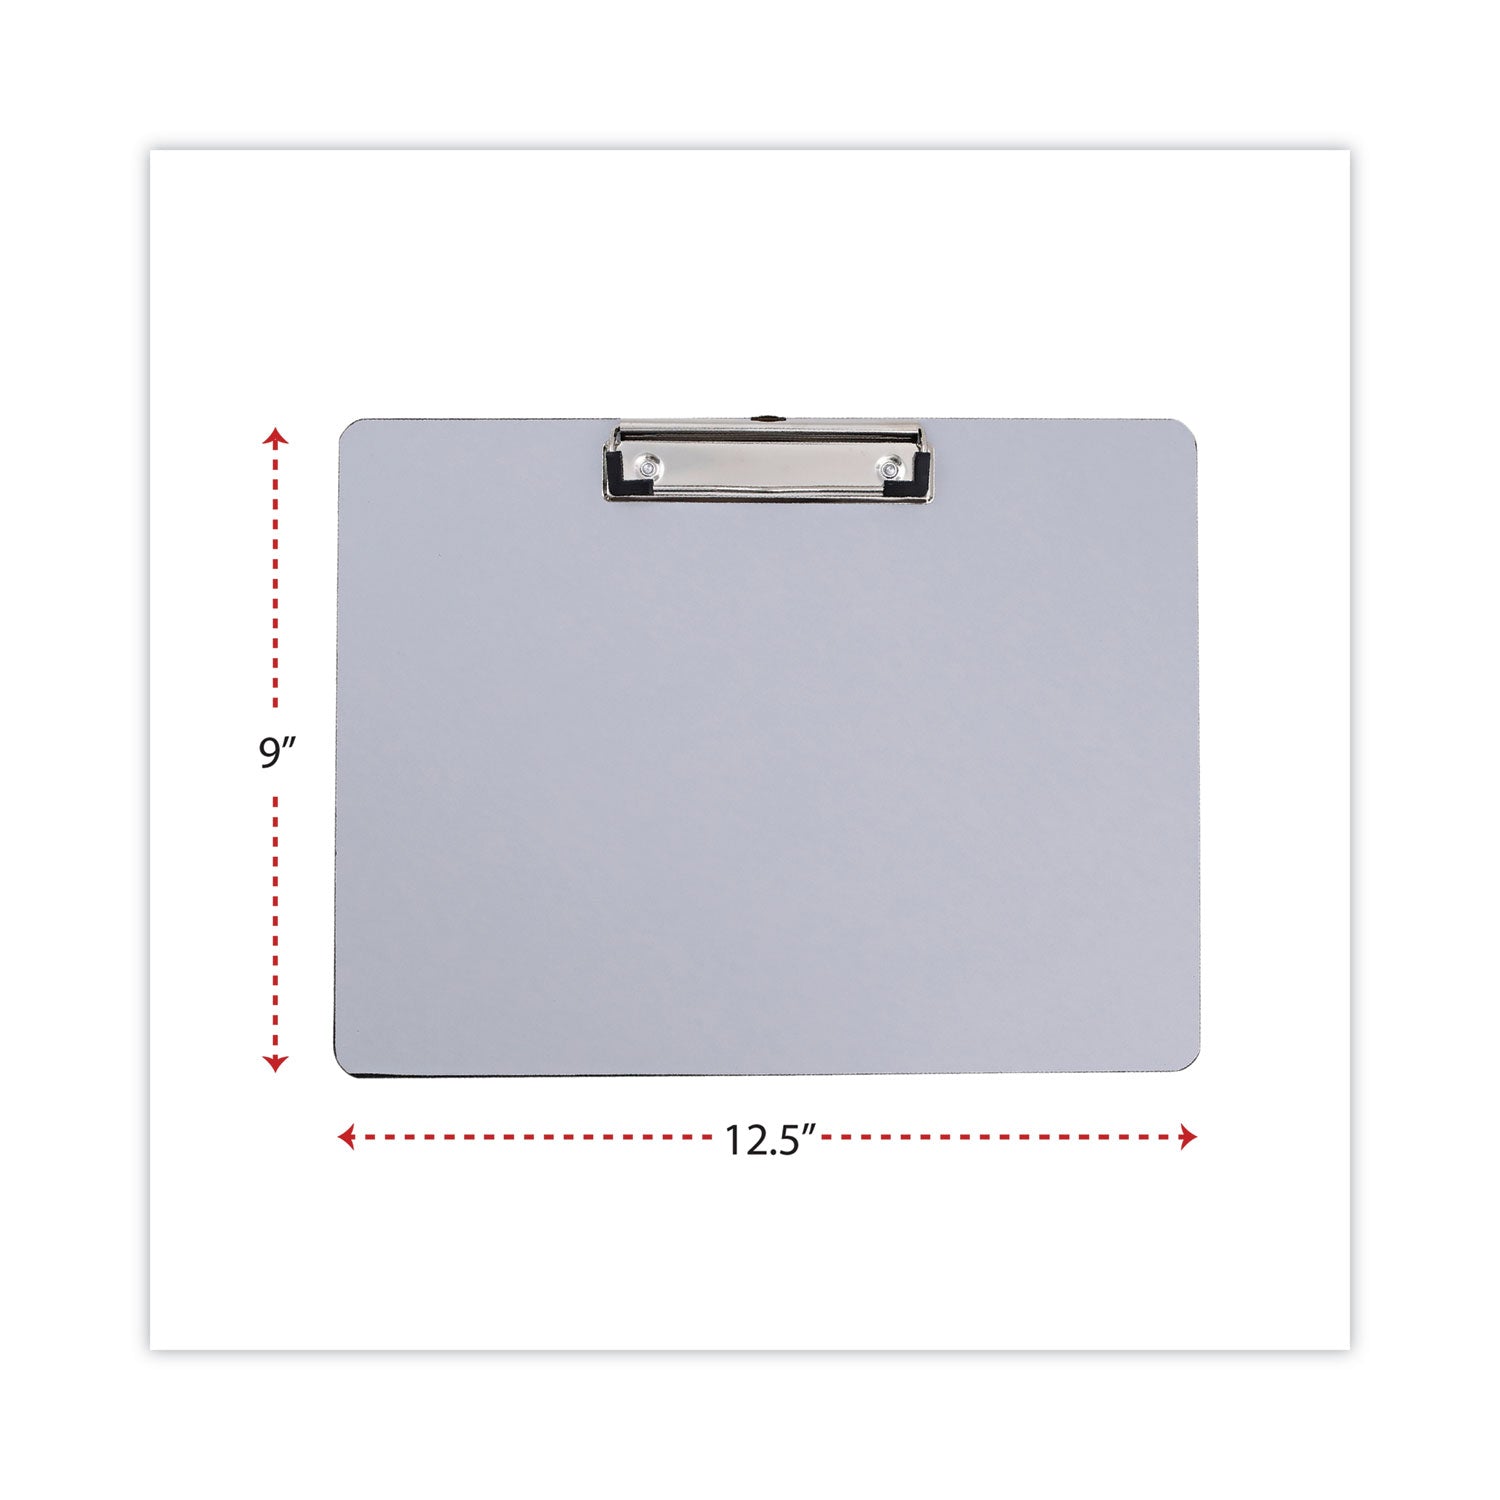 plastic-brushed-aluminum-clipboard-landscape-orientation-05-clip-capacity-holds-11-x-85-sheets-silver_unv40302 - 2